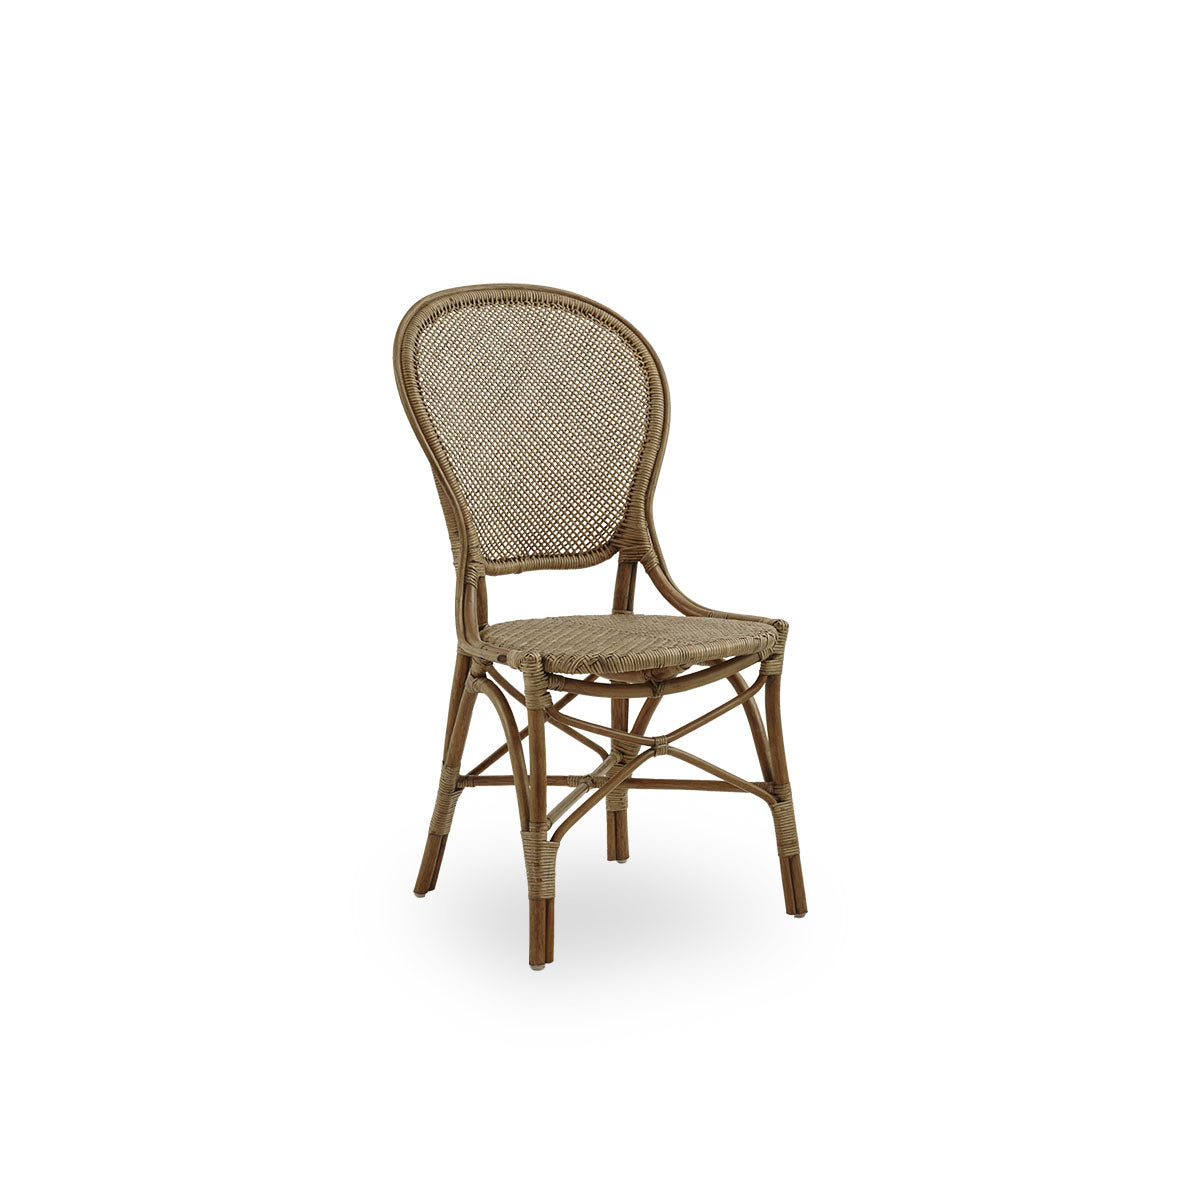 Rattan wicker chair | Rossini Dining Chair - Sika-Design.com